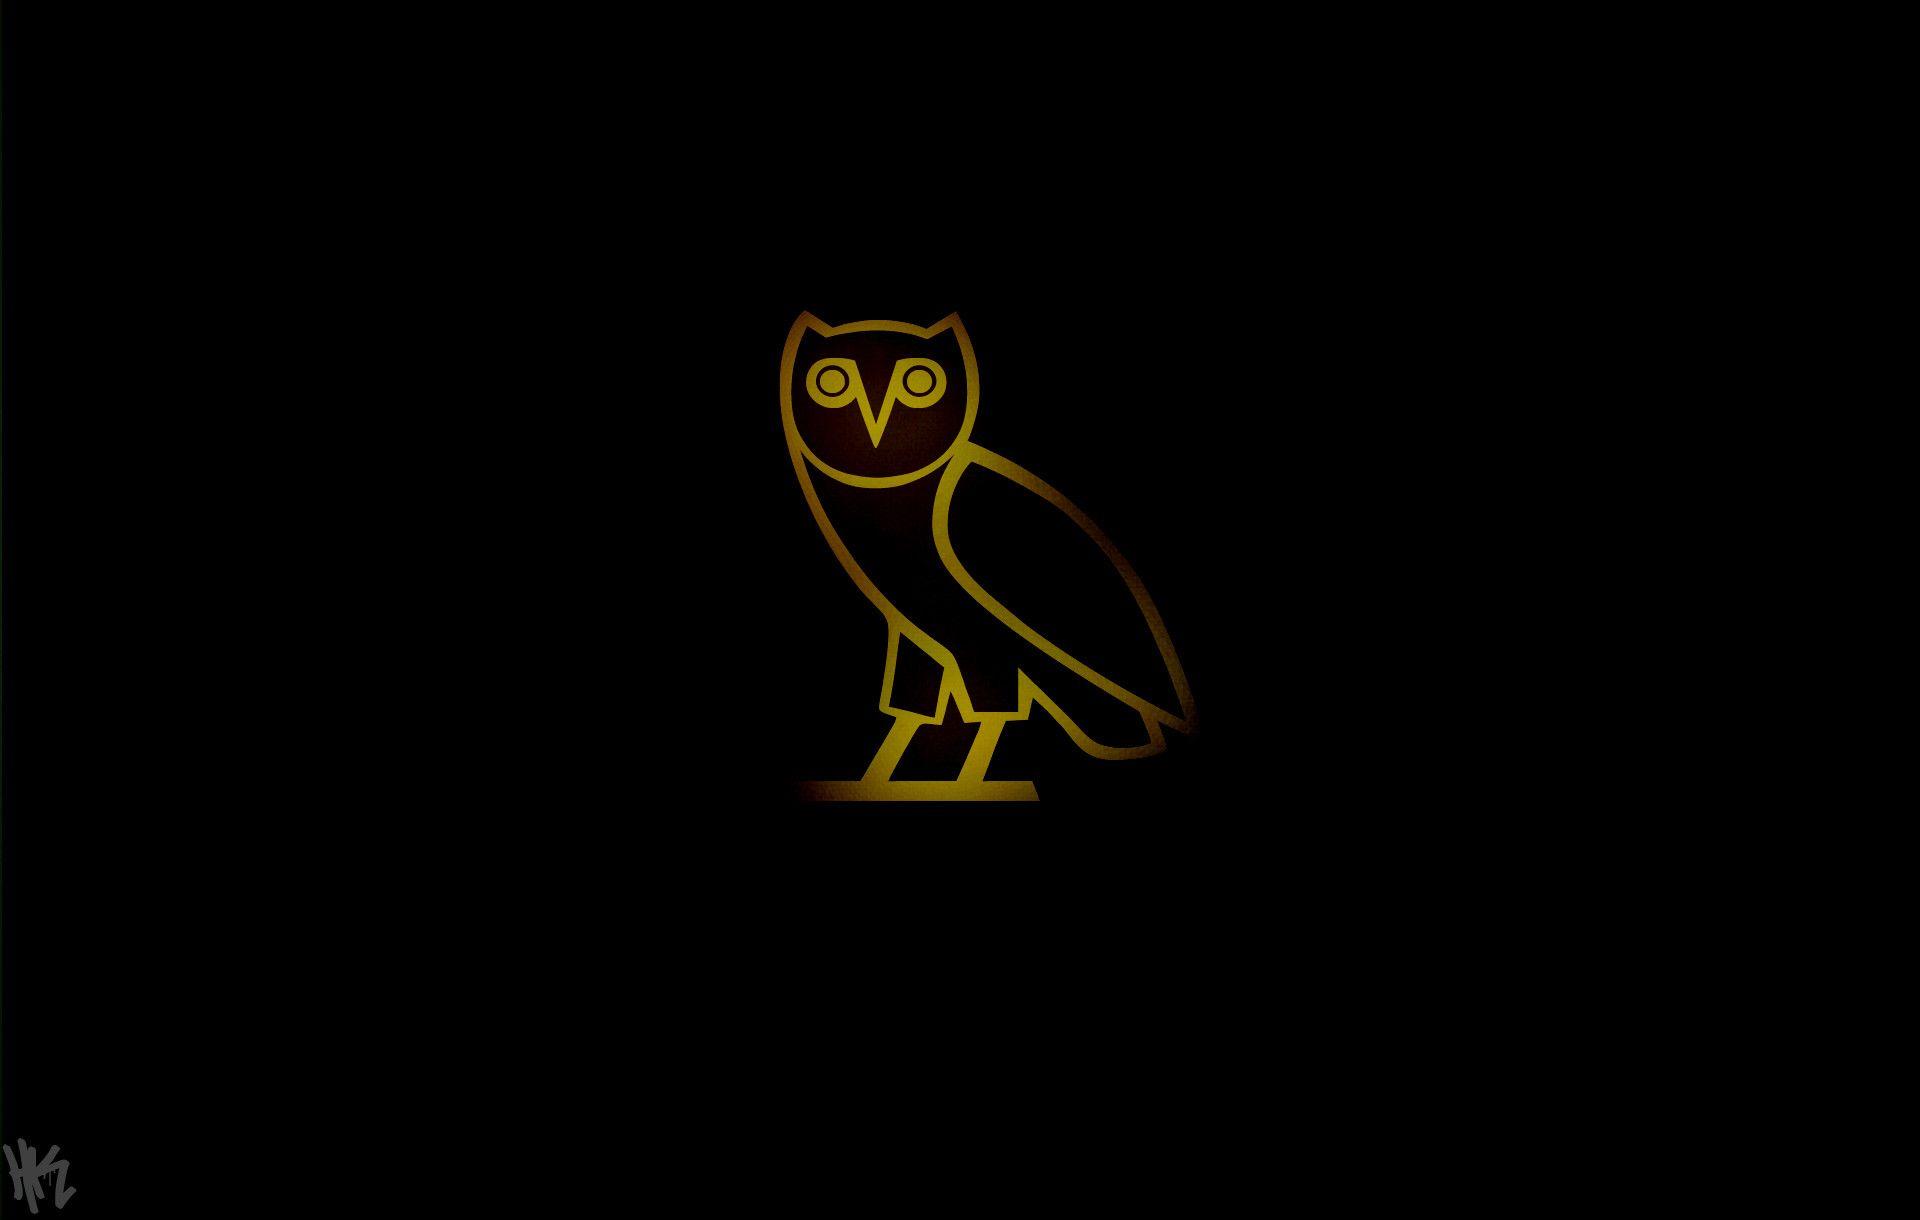 Drake Owl Ovo iPhone Wallpaper